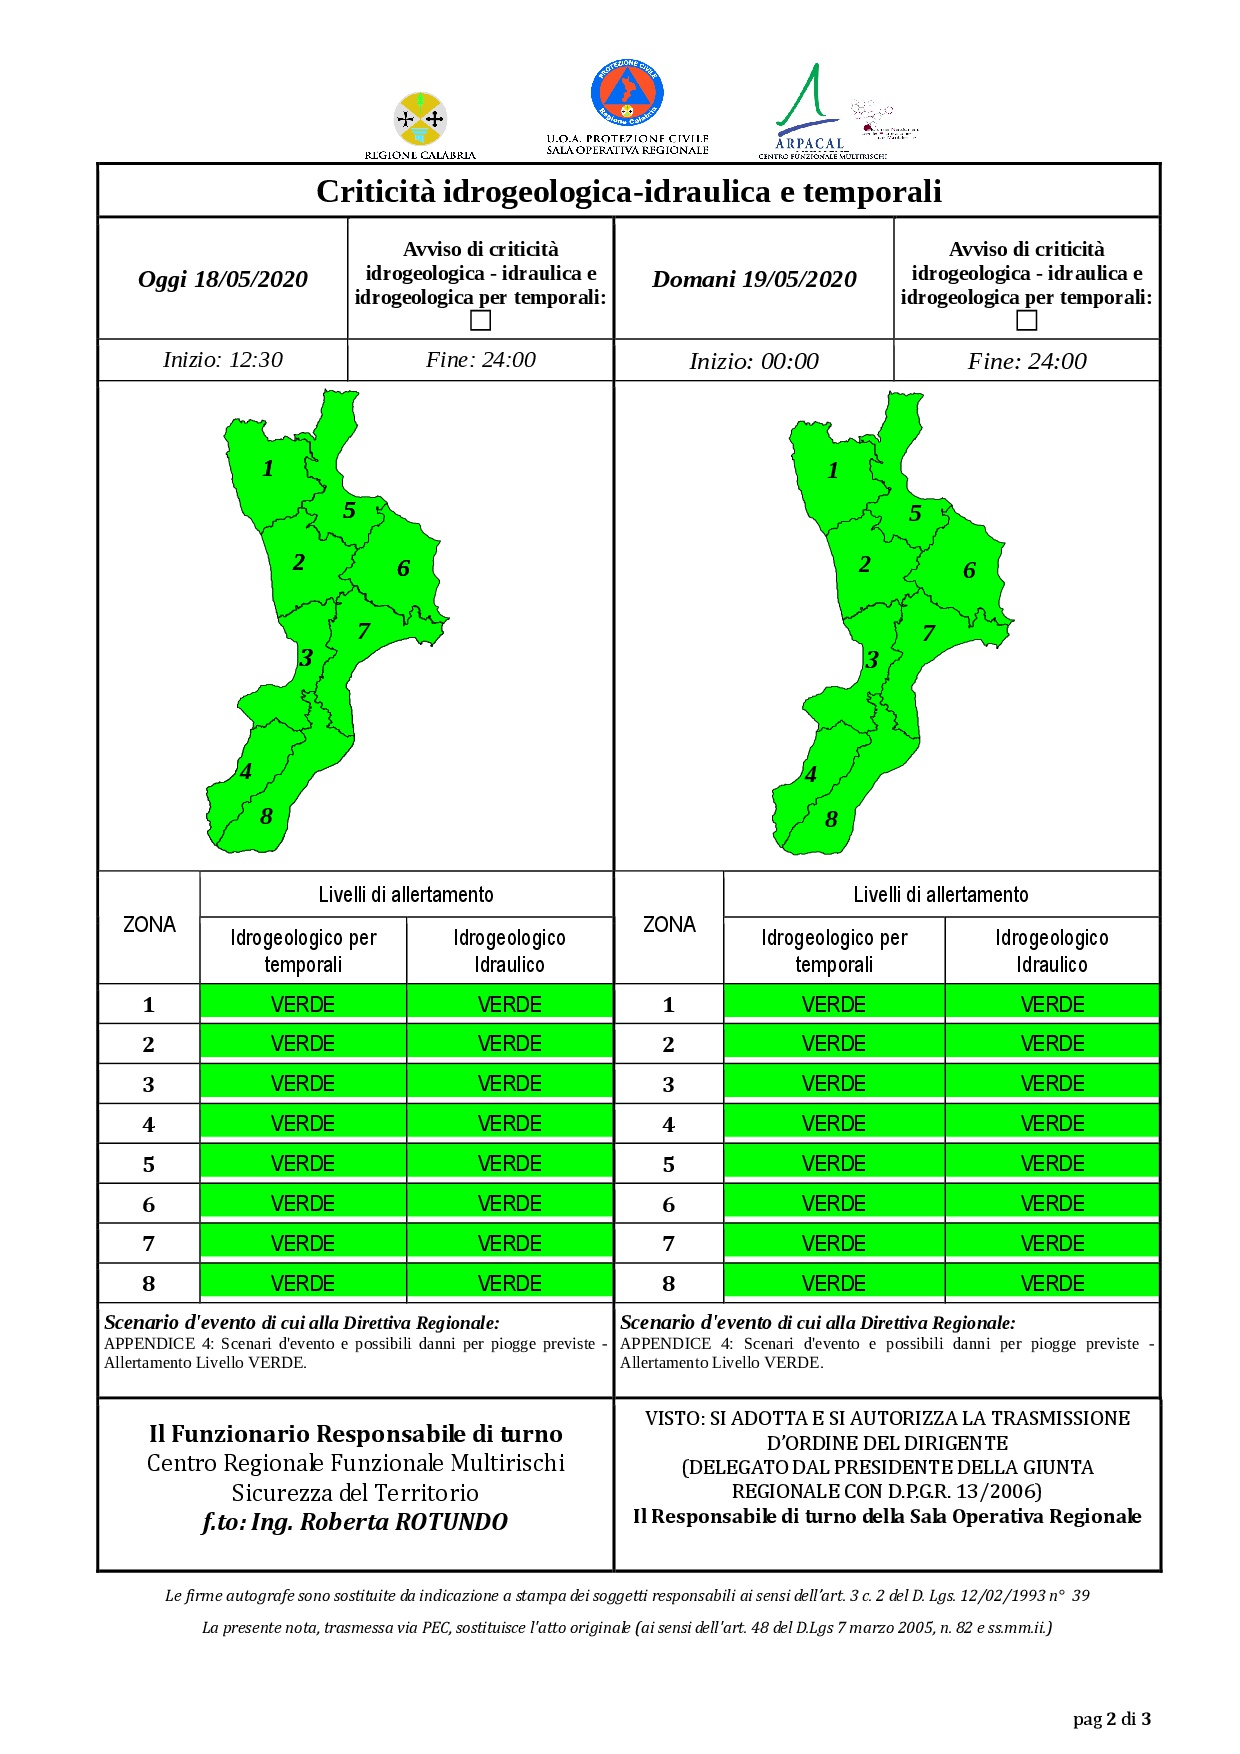 Criticità idrogeologica-idraulica e temporali in Calabria 18-05-2020